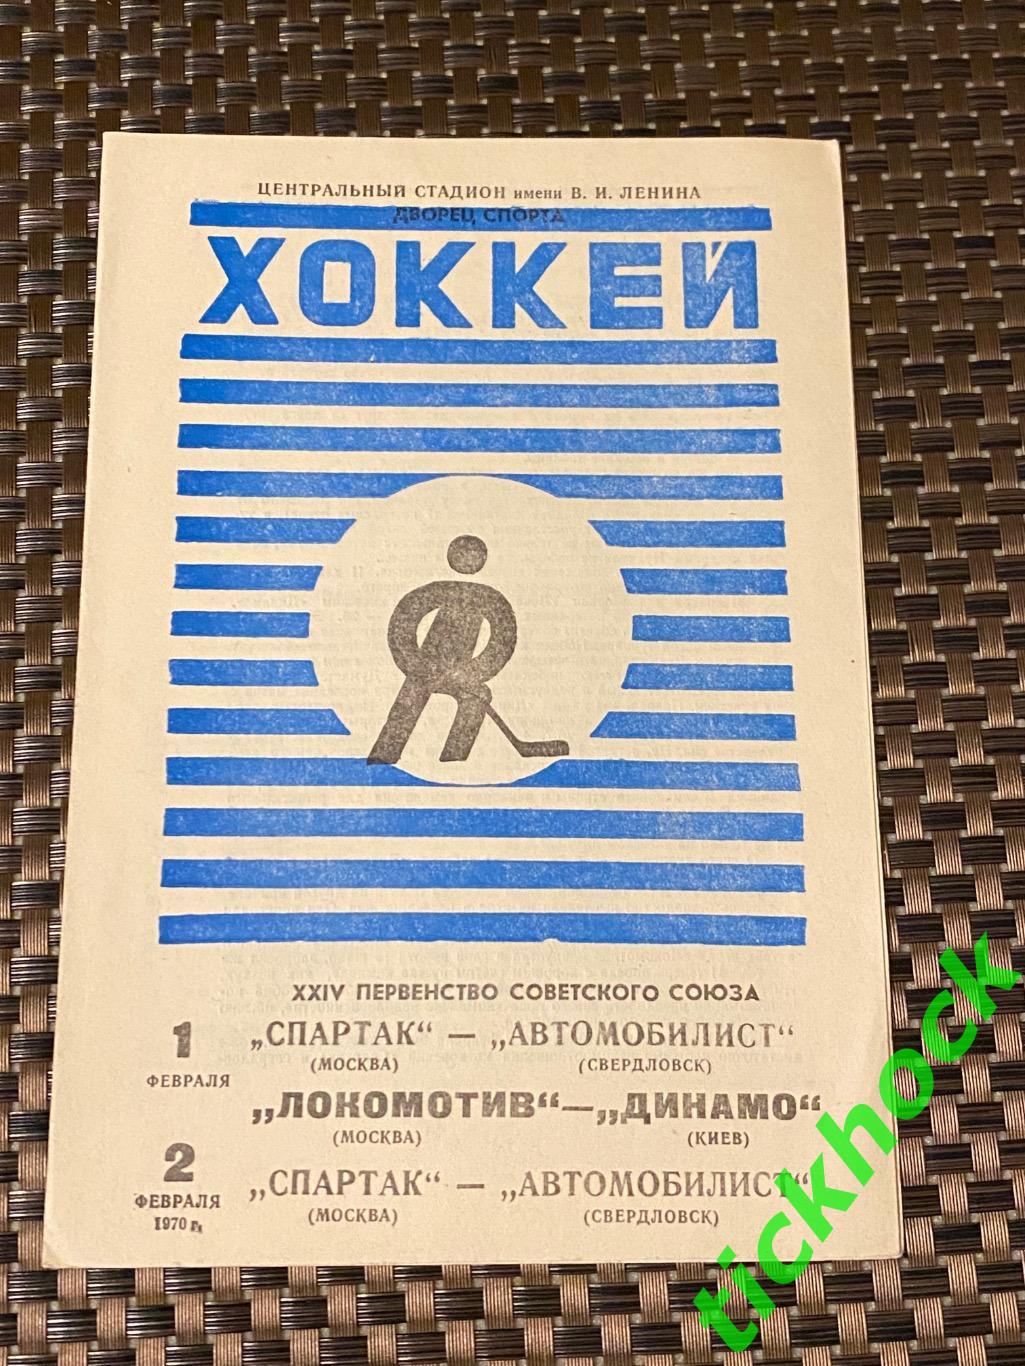 01-02.02.1970 __ Спартак Москва - Автомобилист + Локомотив - Динамо Киев _ SY